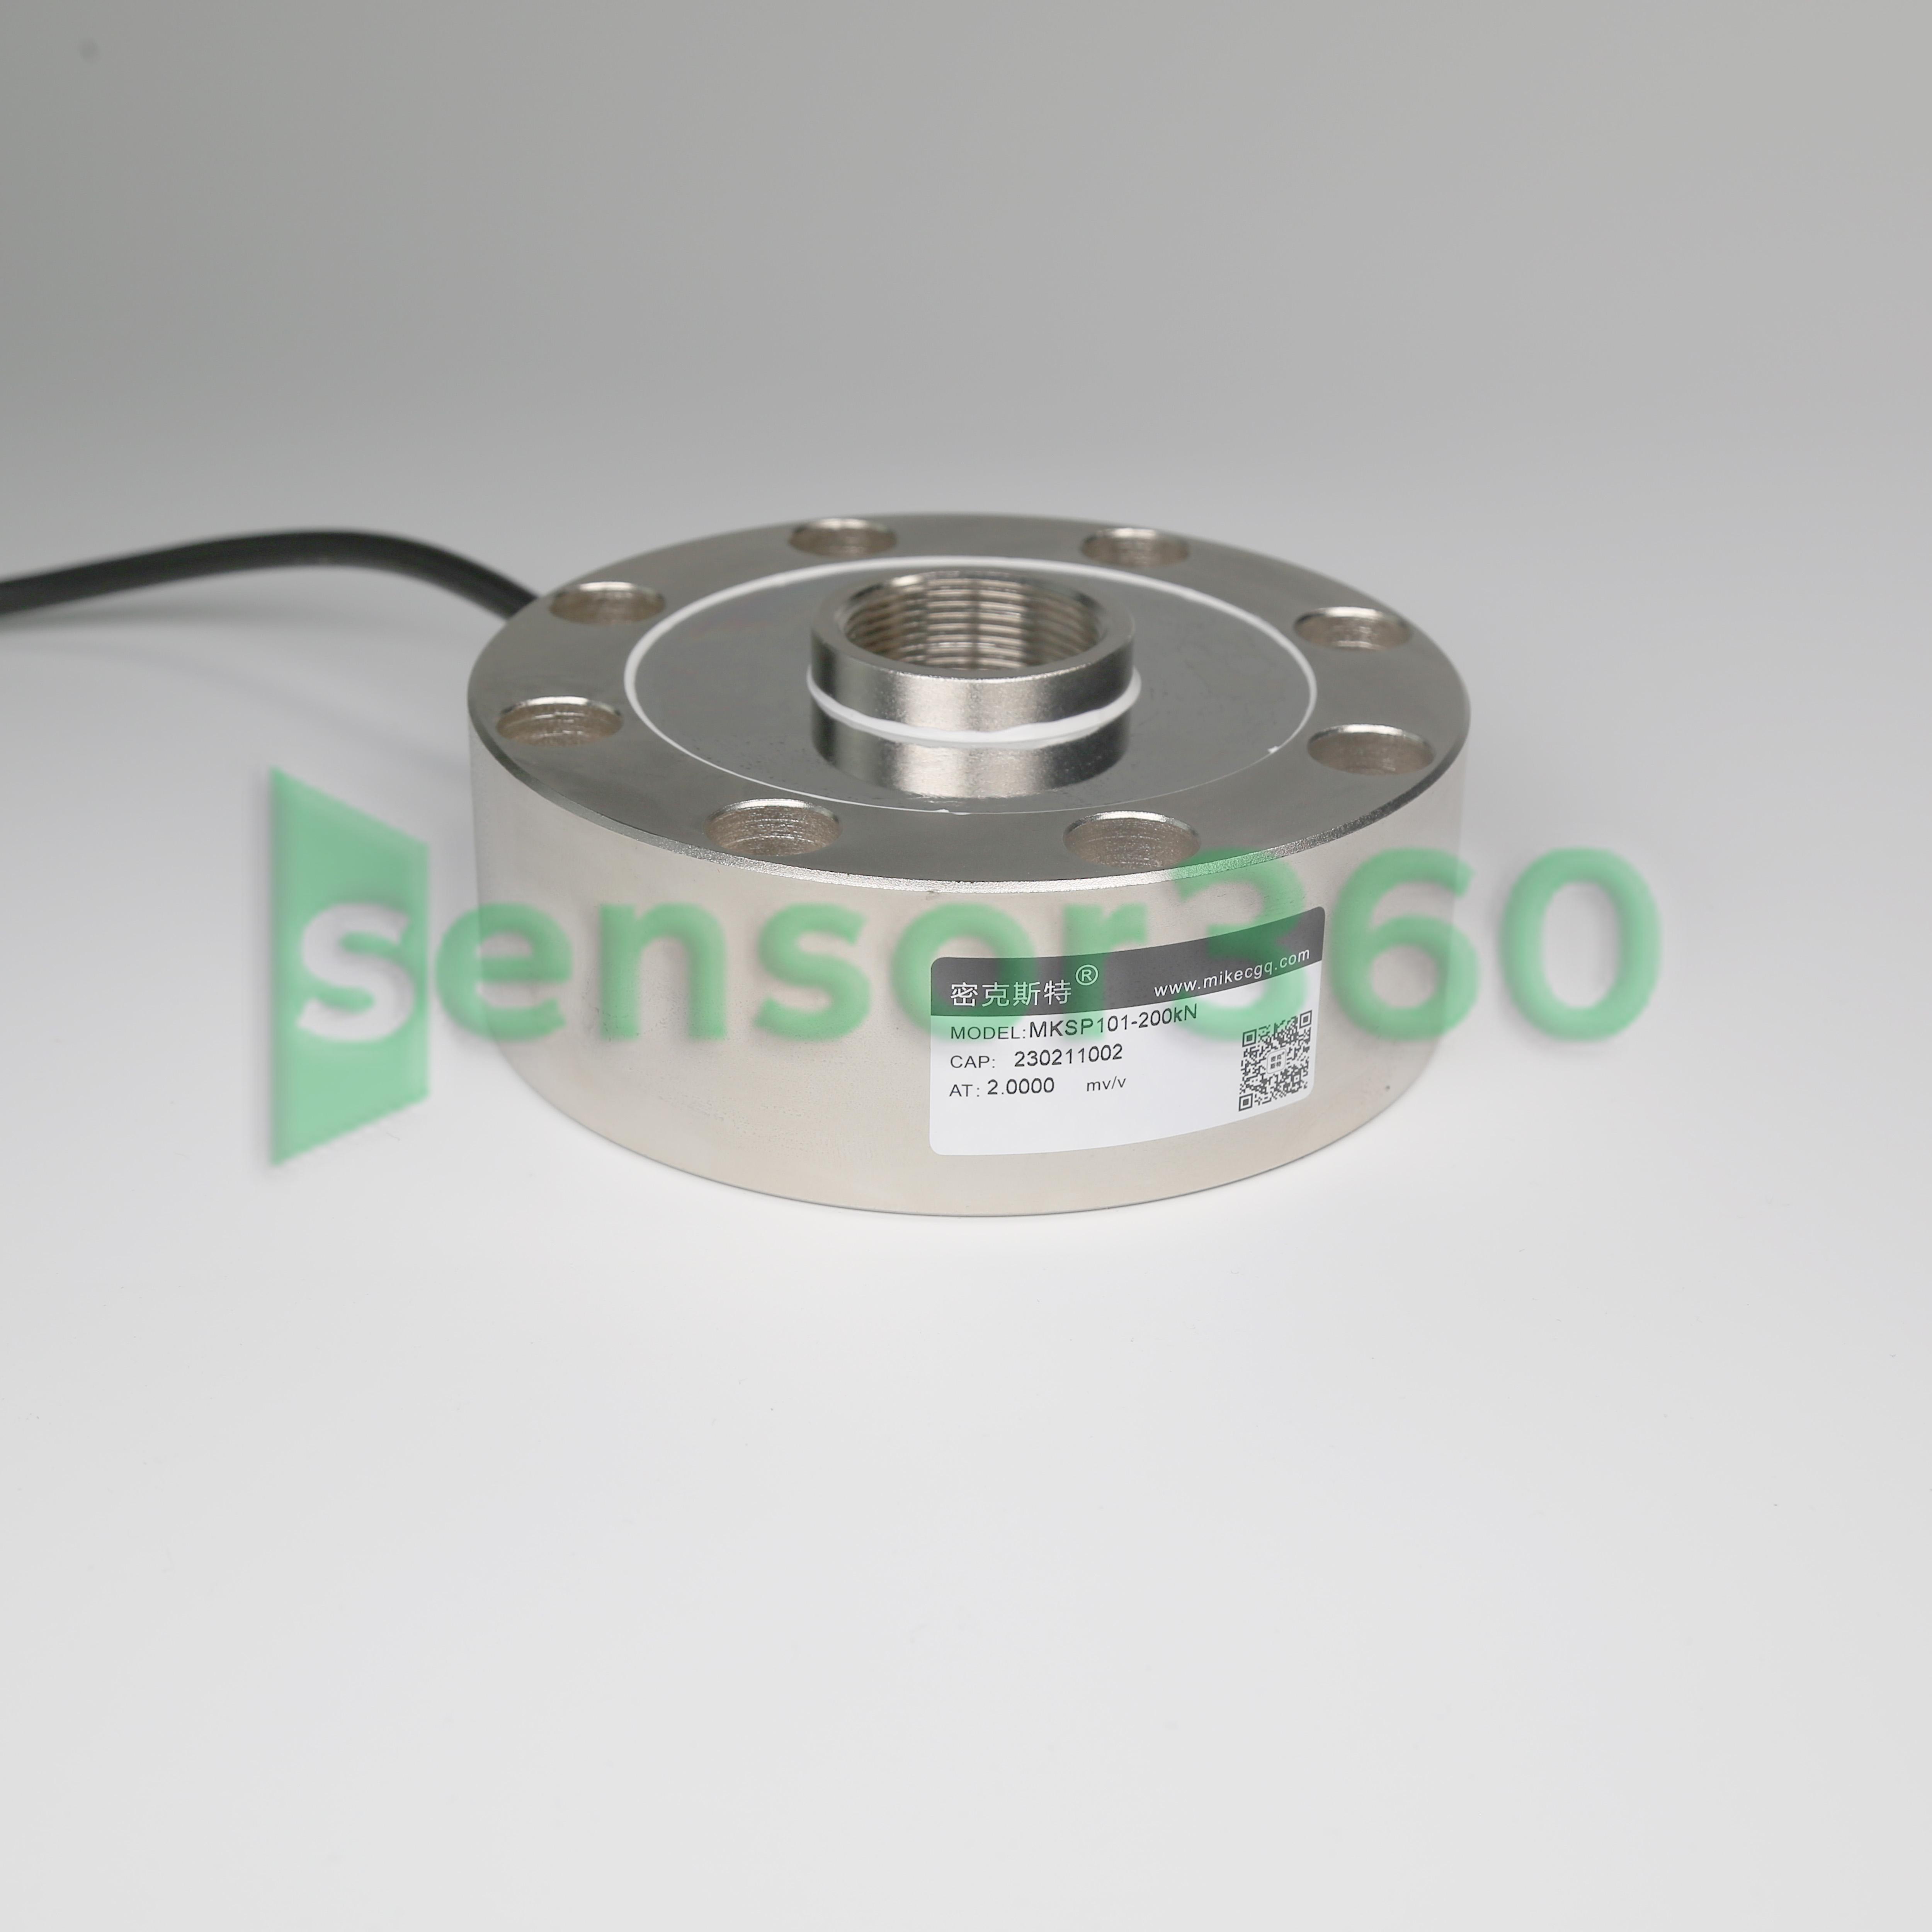 MKSP101-200kN spoke sensor